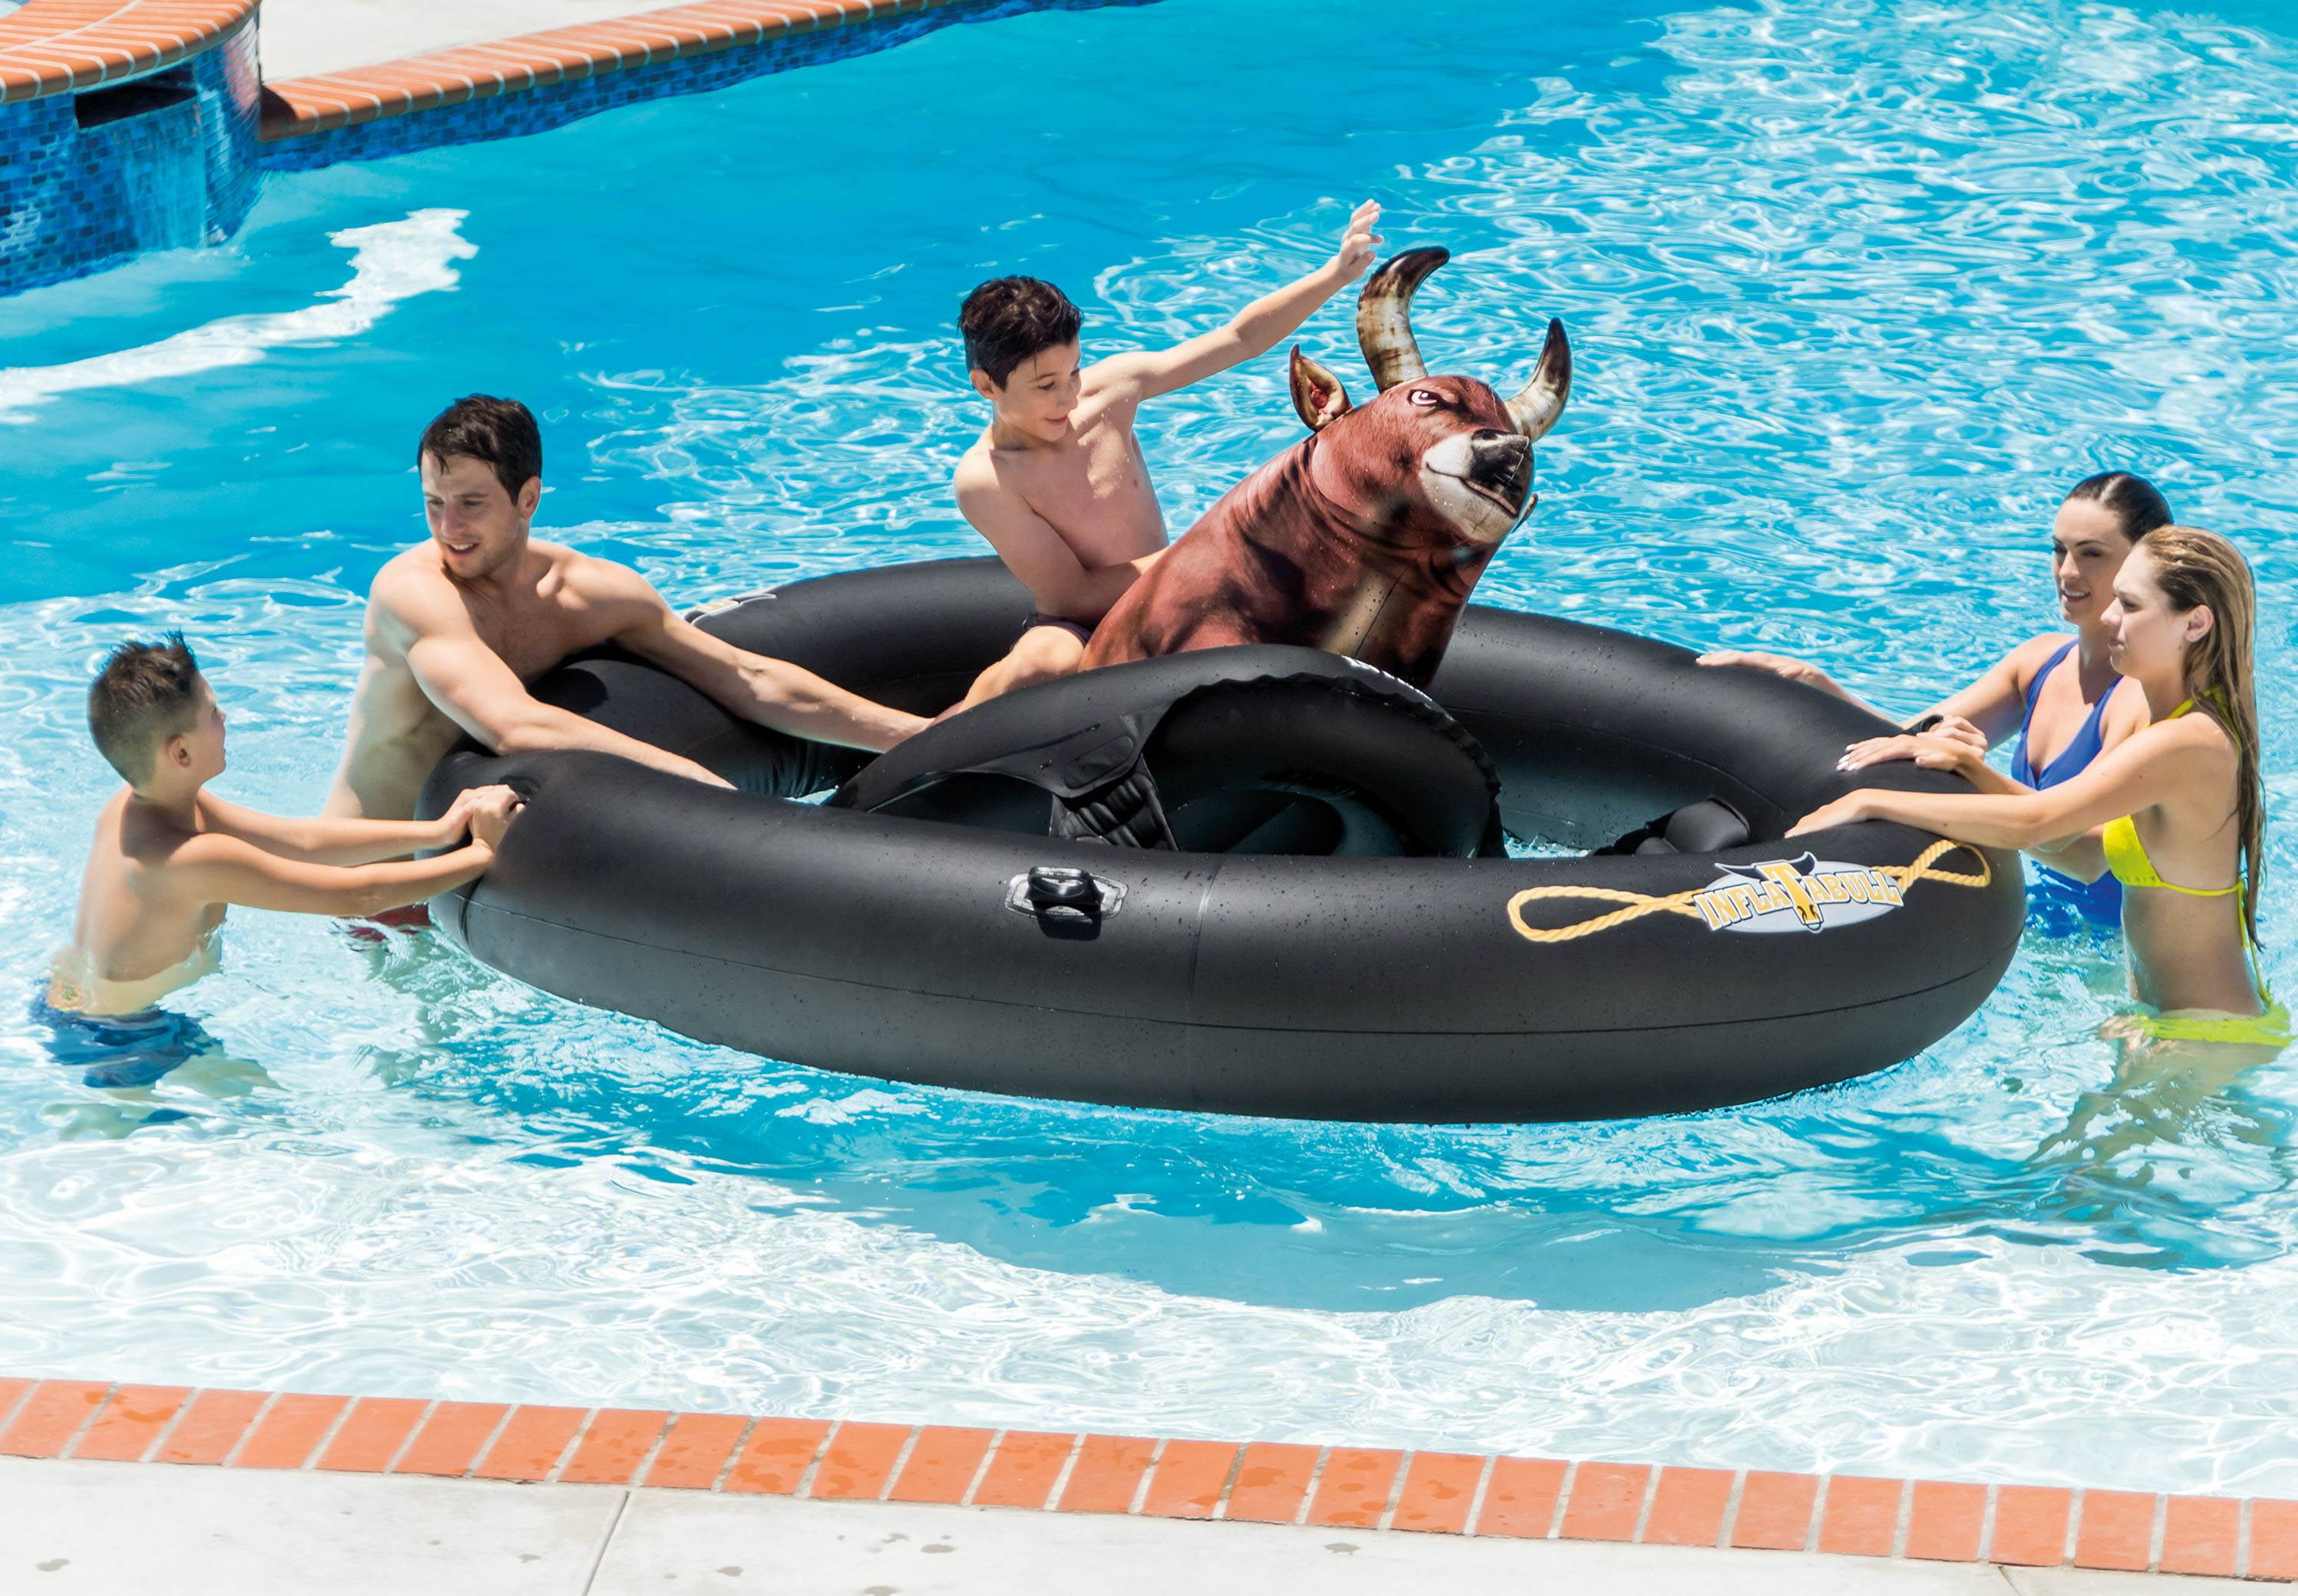 bull inflatable pool